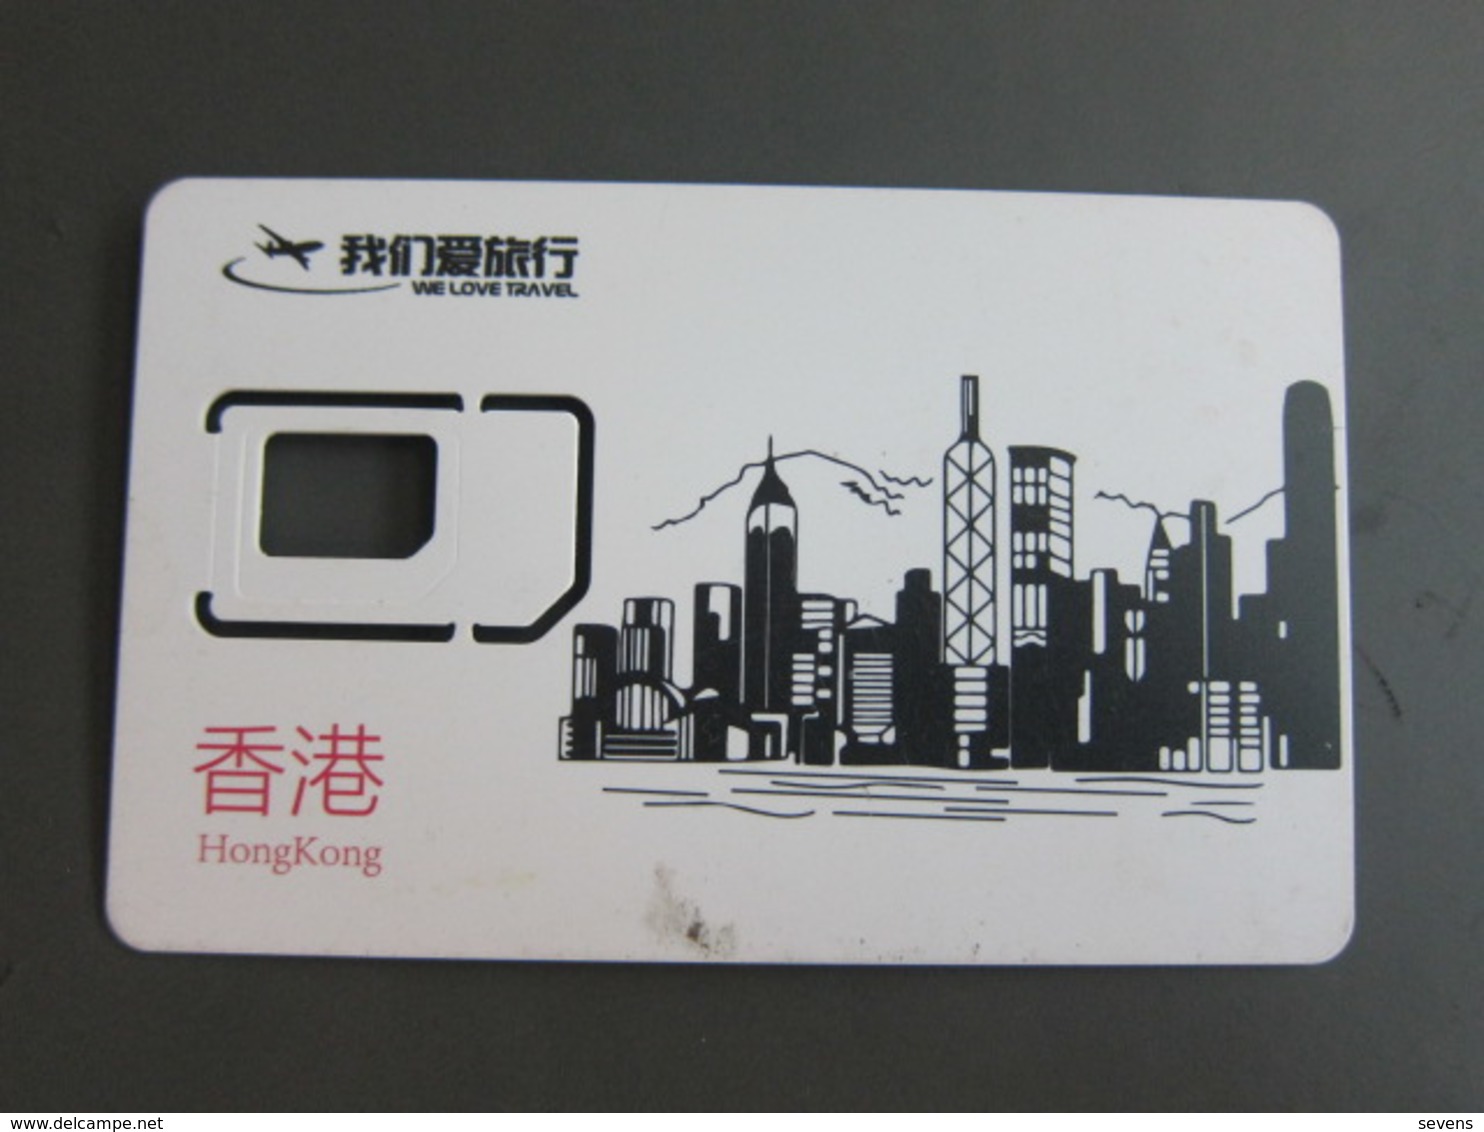 GSM SIM Card, We Love Travel, No Chip,only Frame - Hongkong